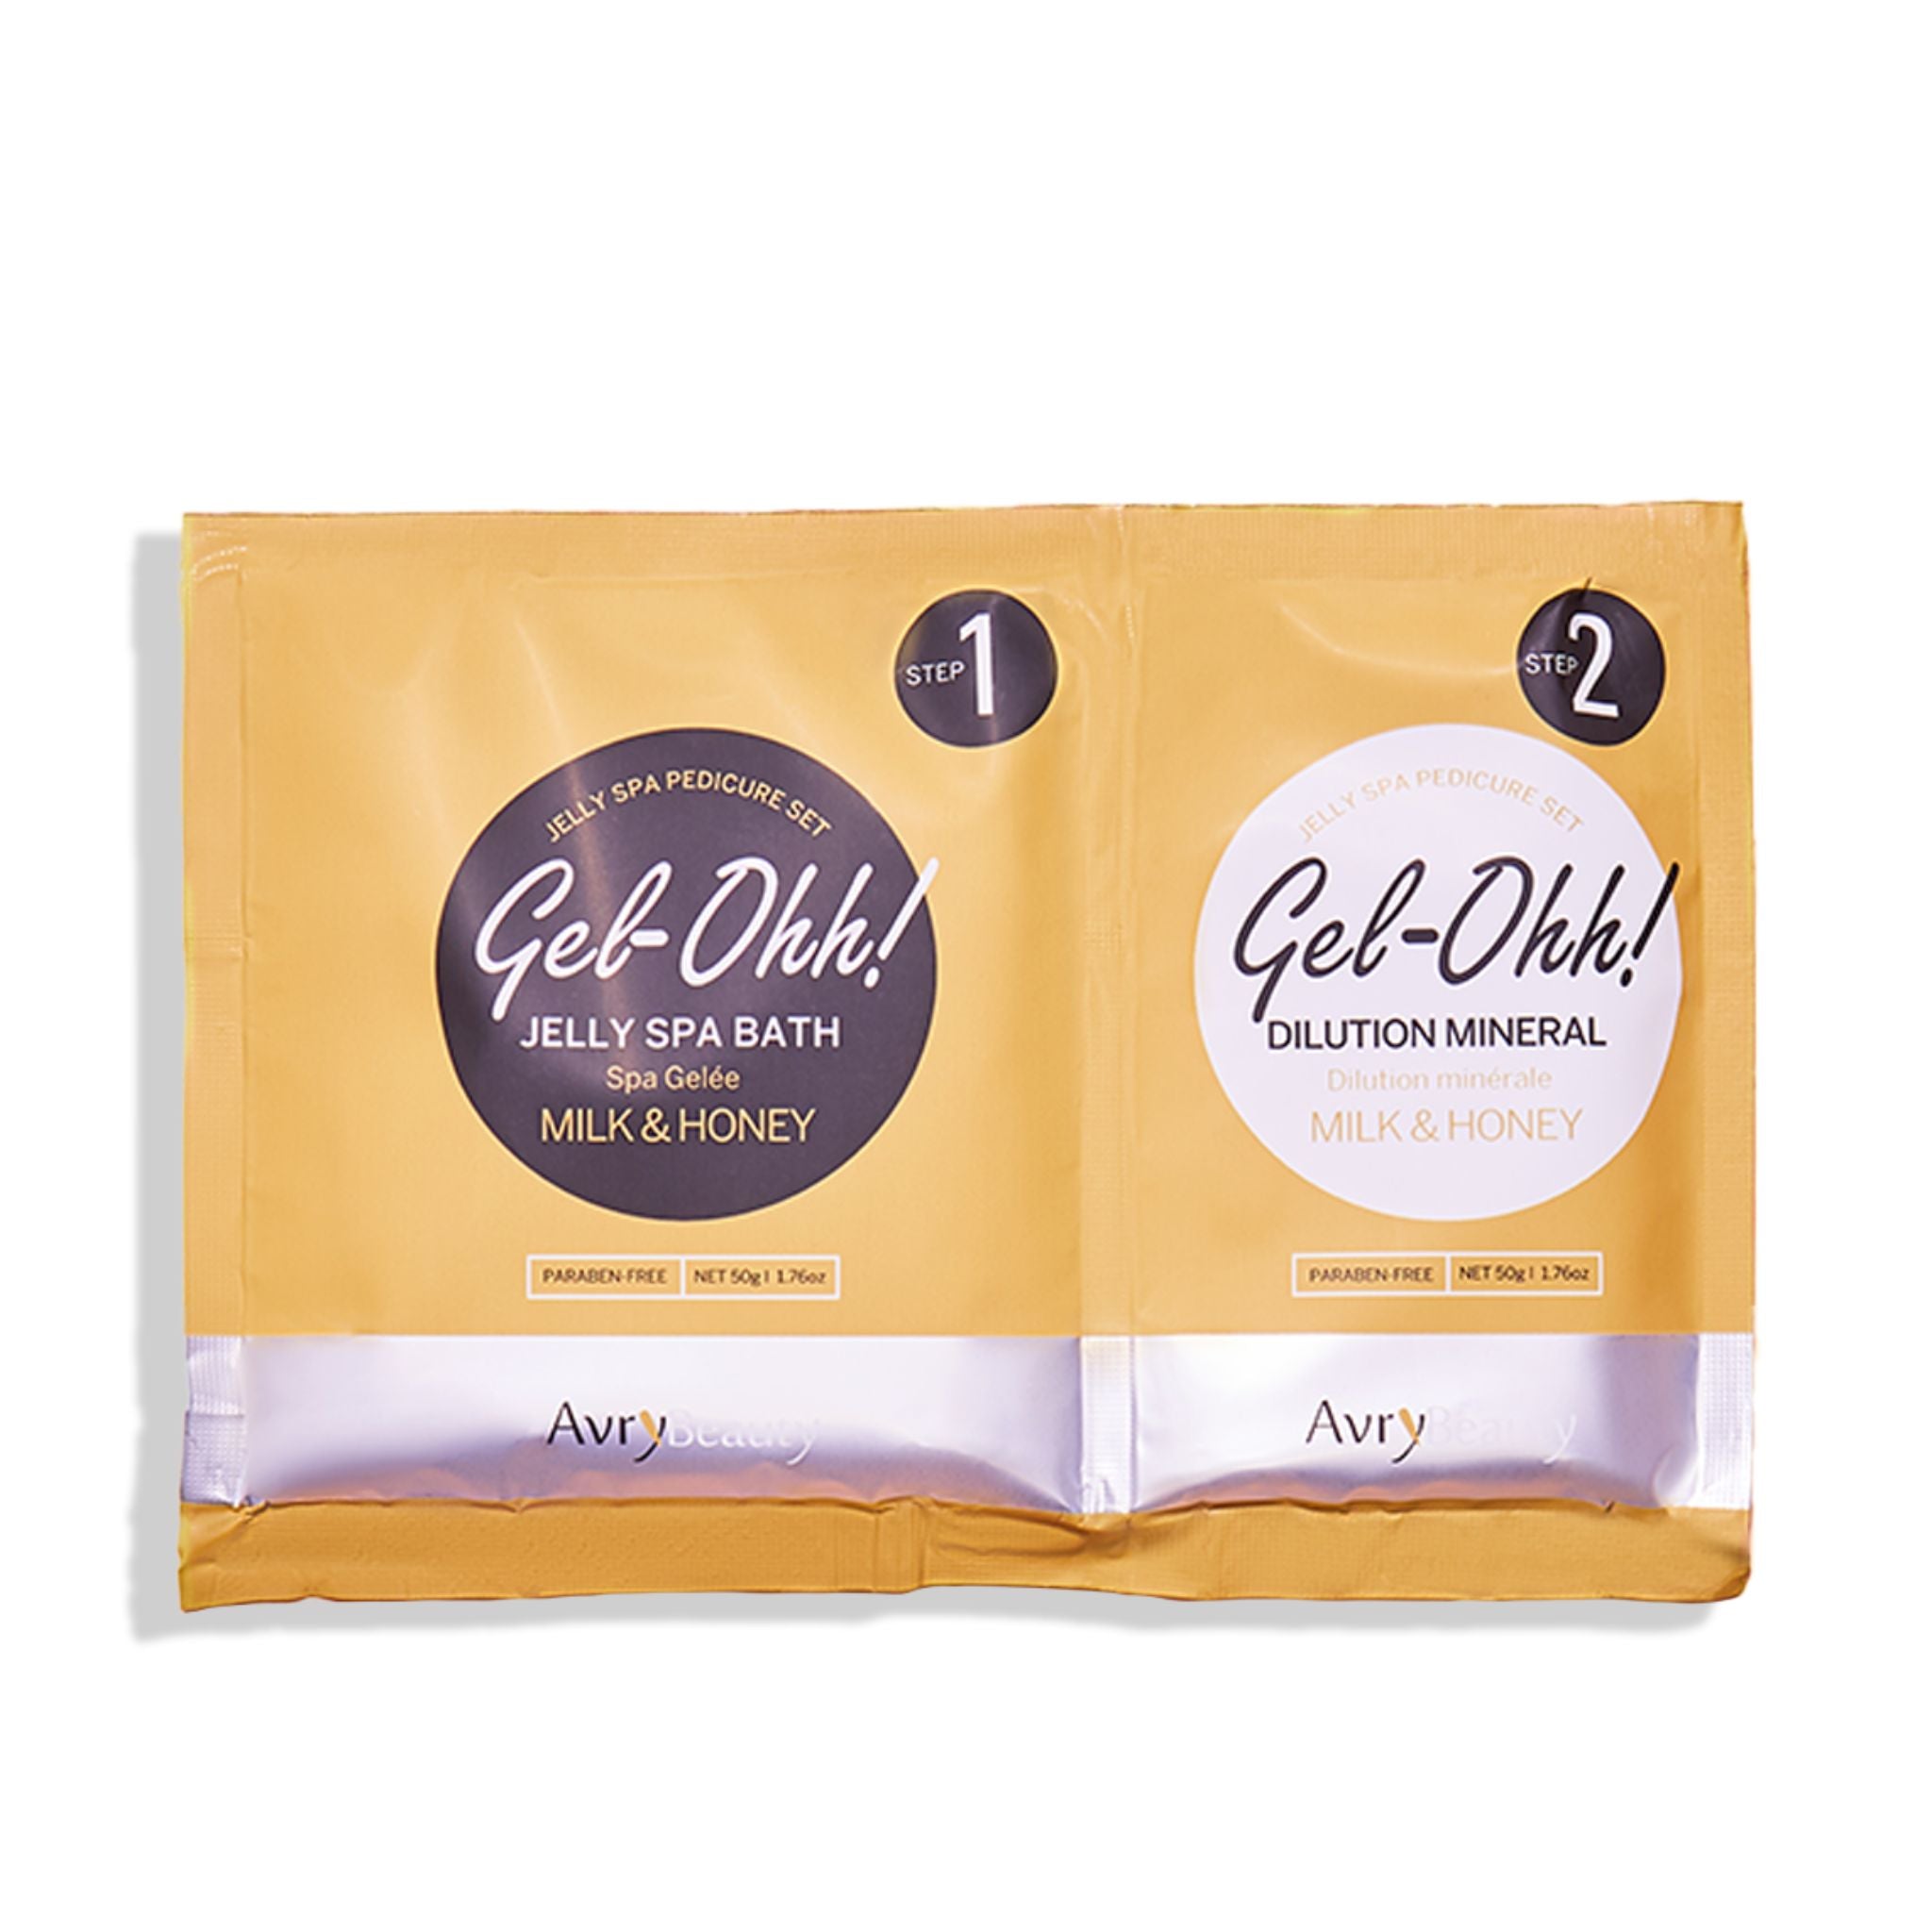 Avry Beauty Gel-Ohh Jelly Spa Pedi Bath - Milk & Honey